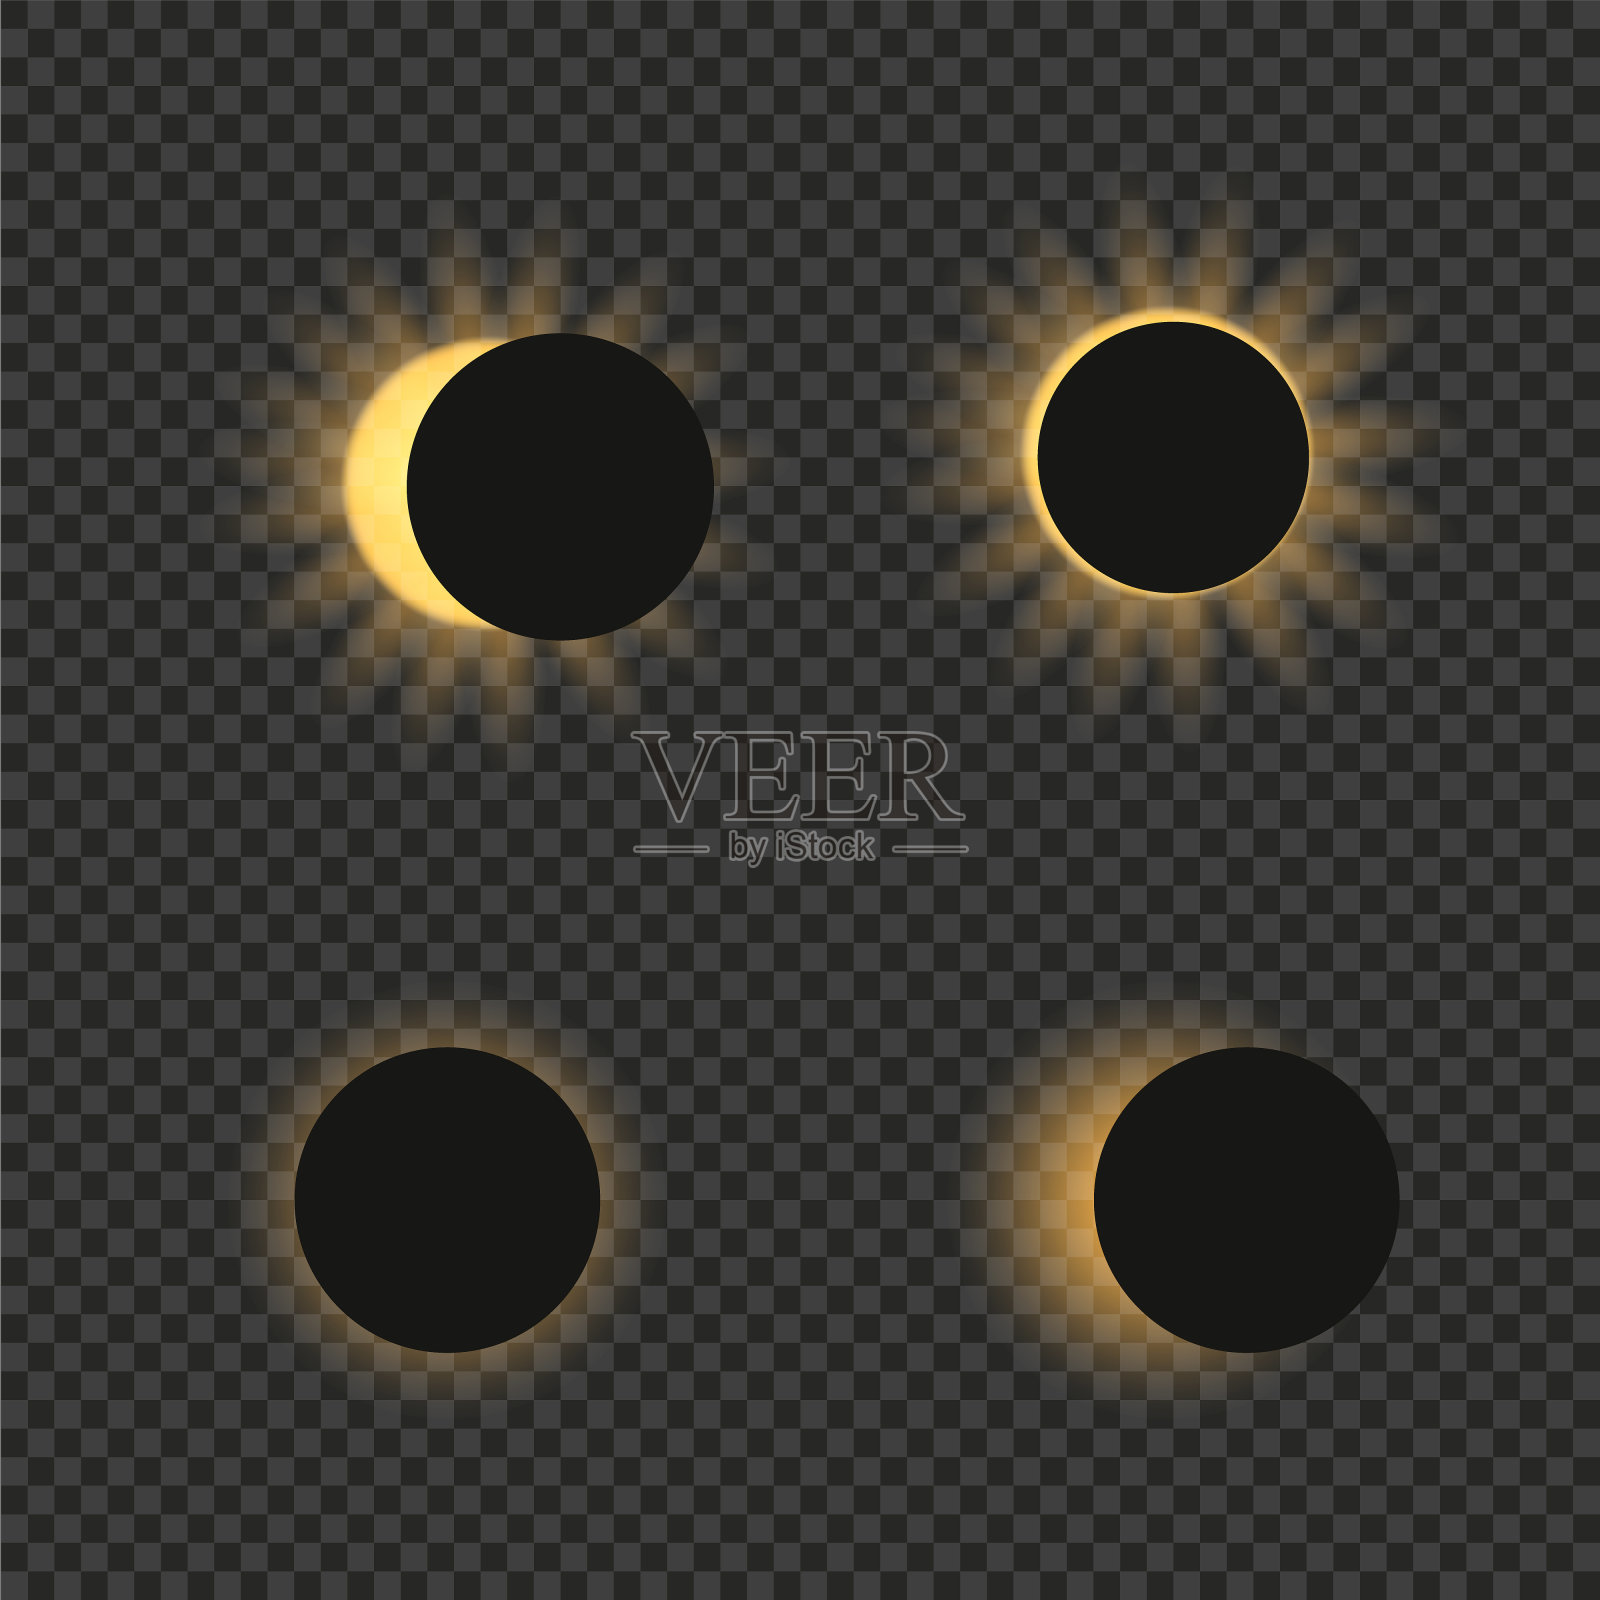 Eclipse矢量插图。集插画图片素材